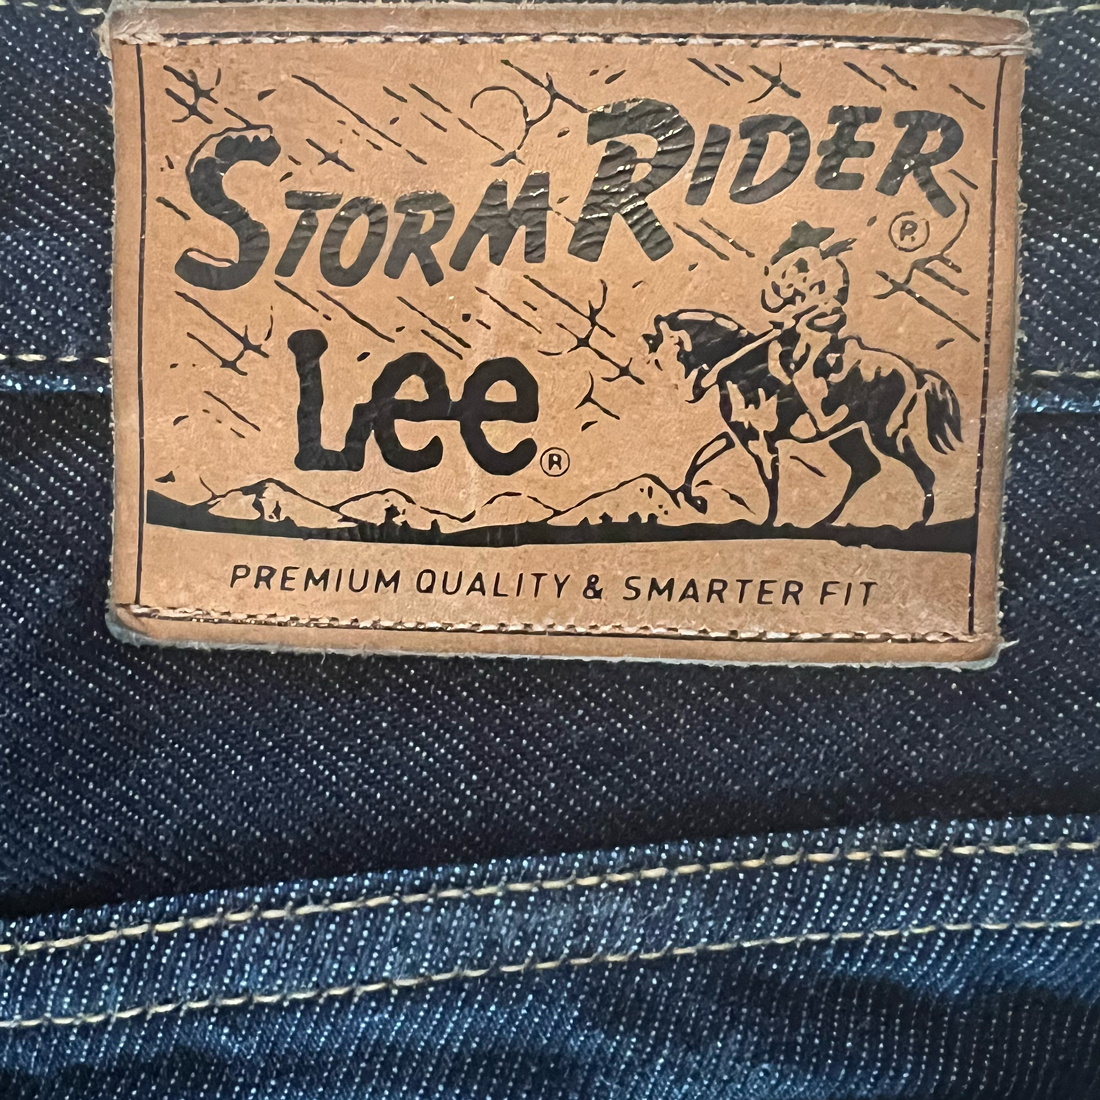 Storm Rider Jeans